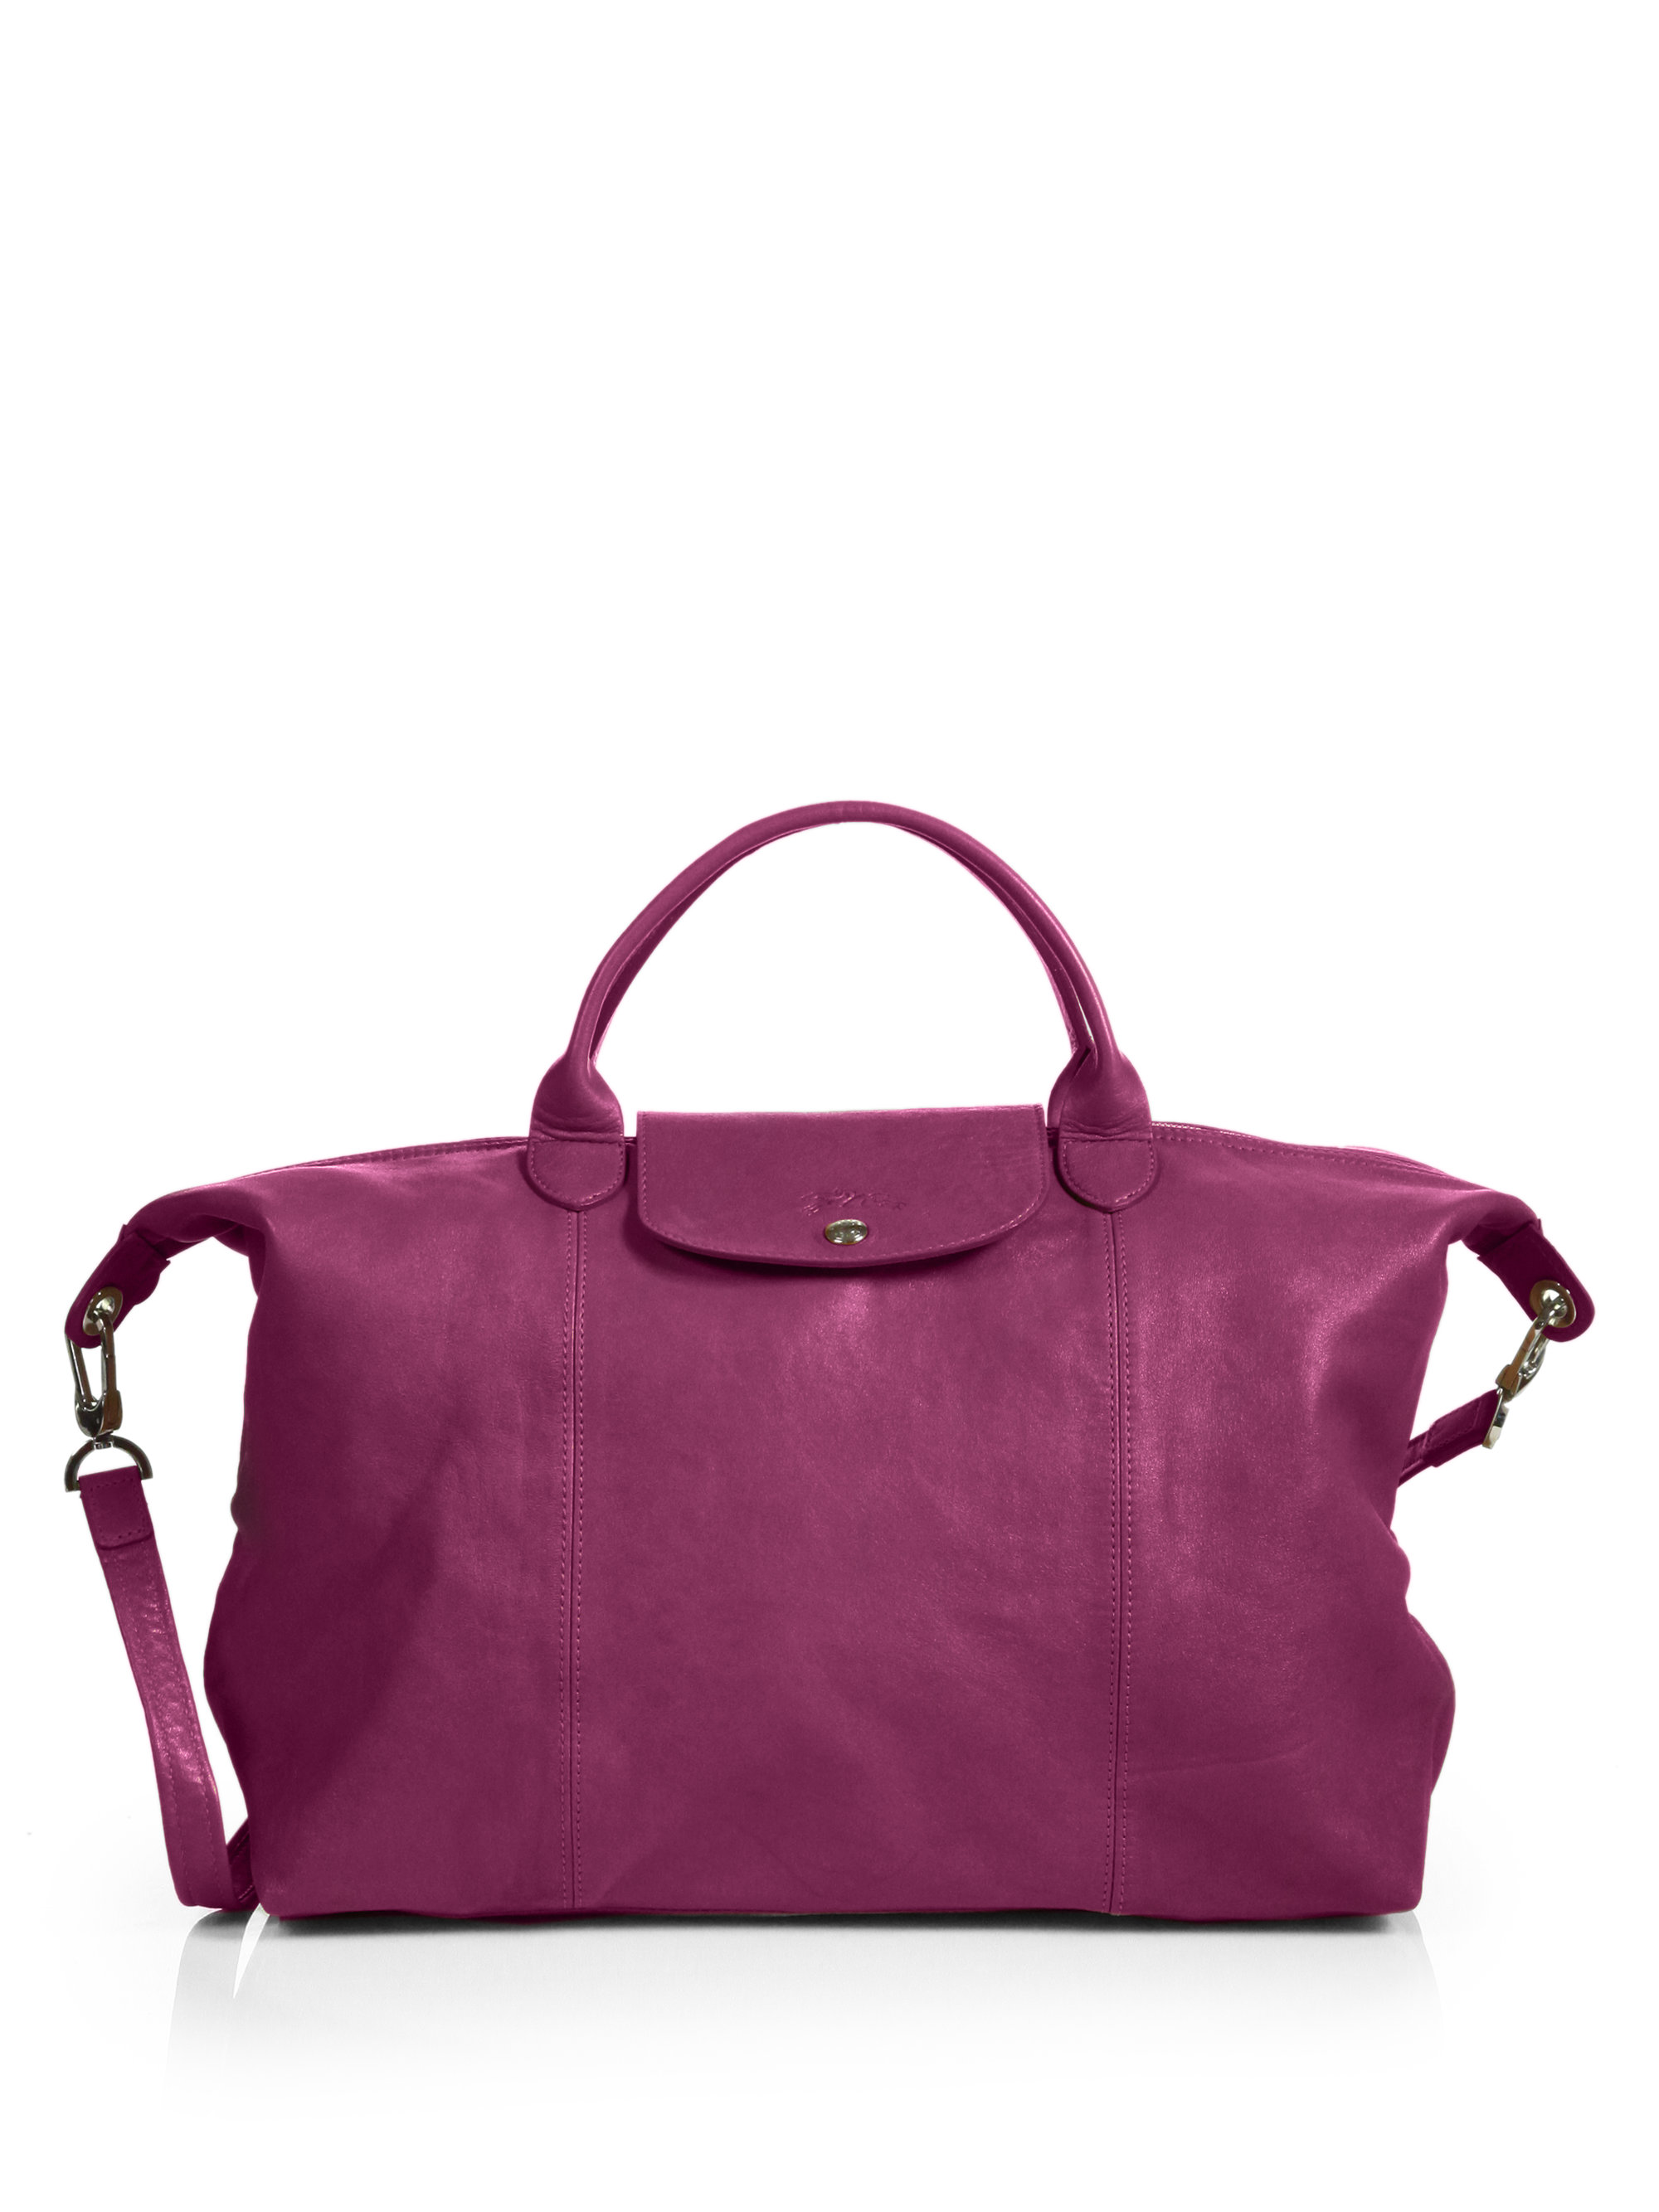 Longchamp Le Pliage Cuir Small Top Handle Bag in Purple (fuchsia) Lyst